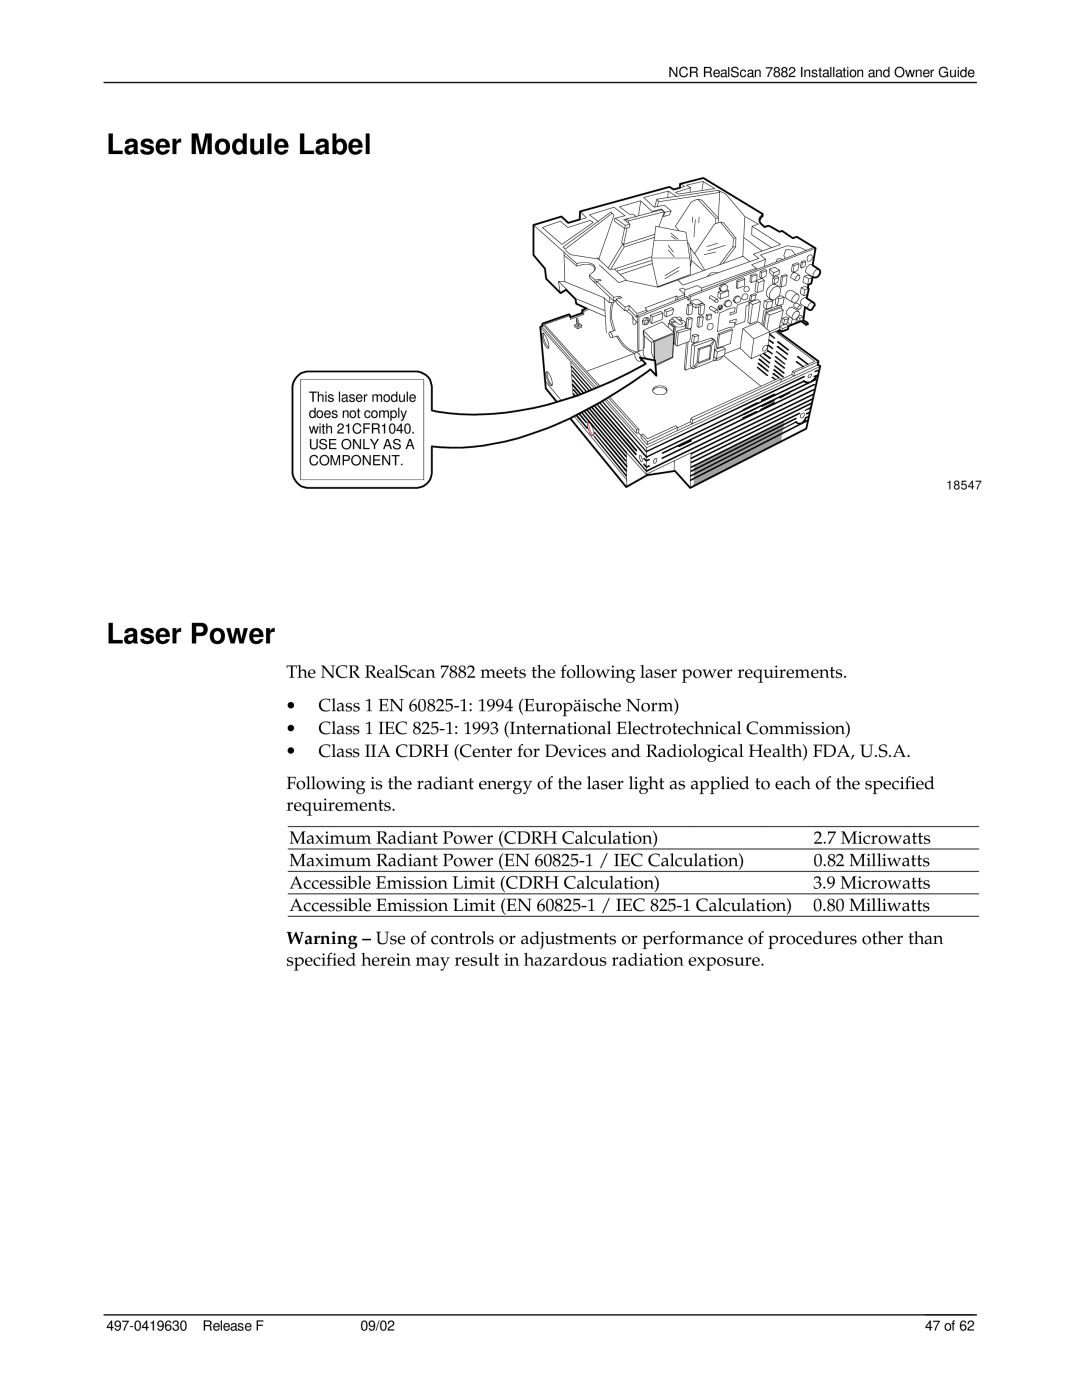 NCR 7882 manual Laser Module Label, Laser Power 